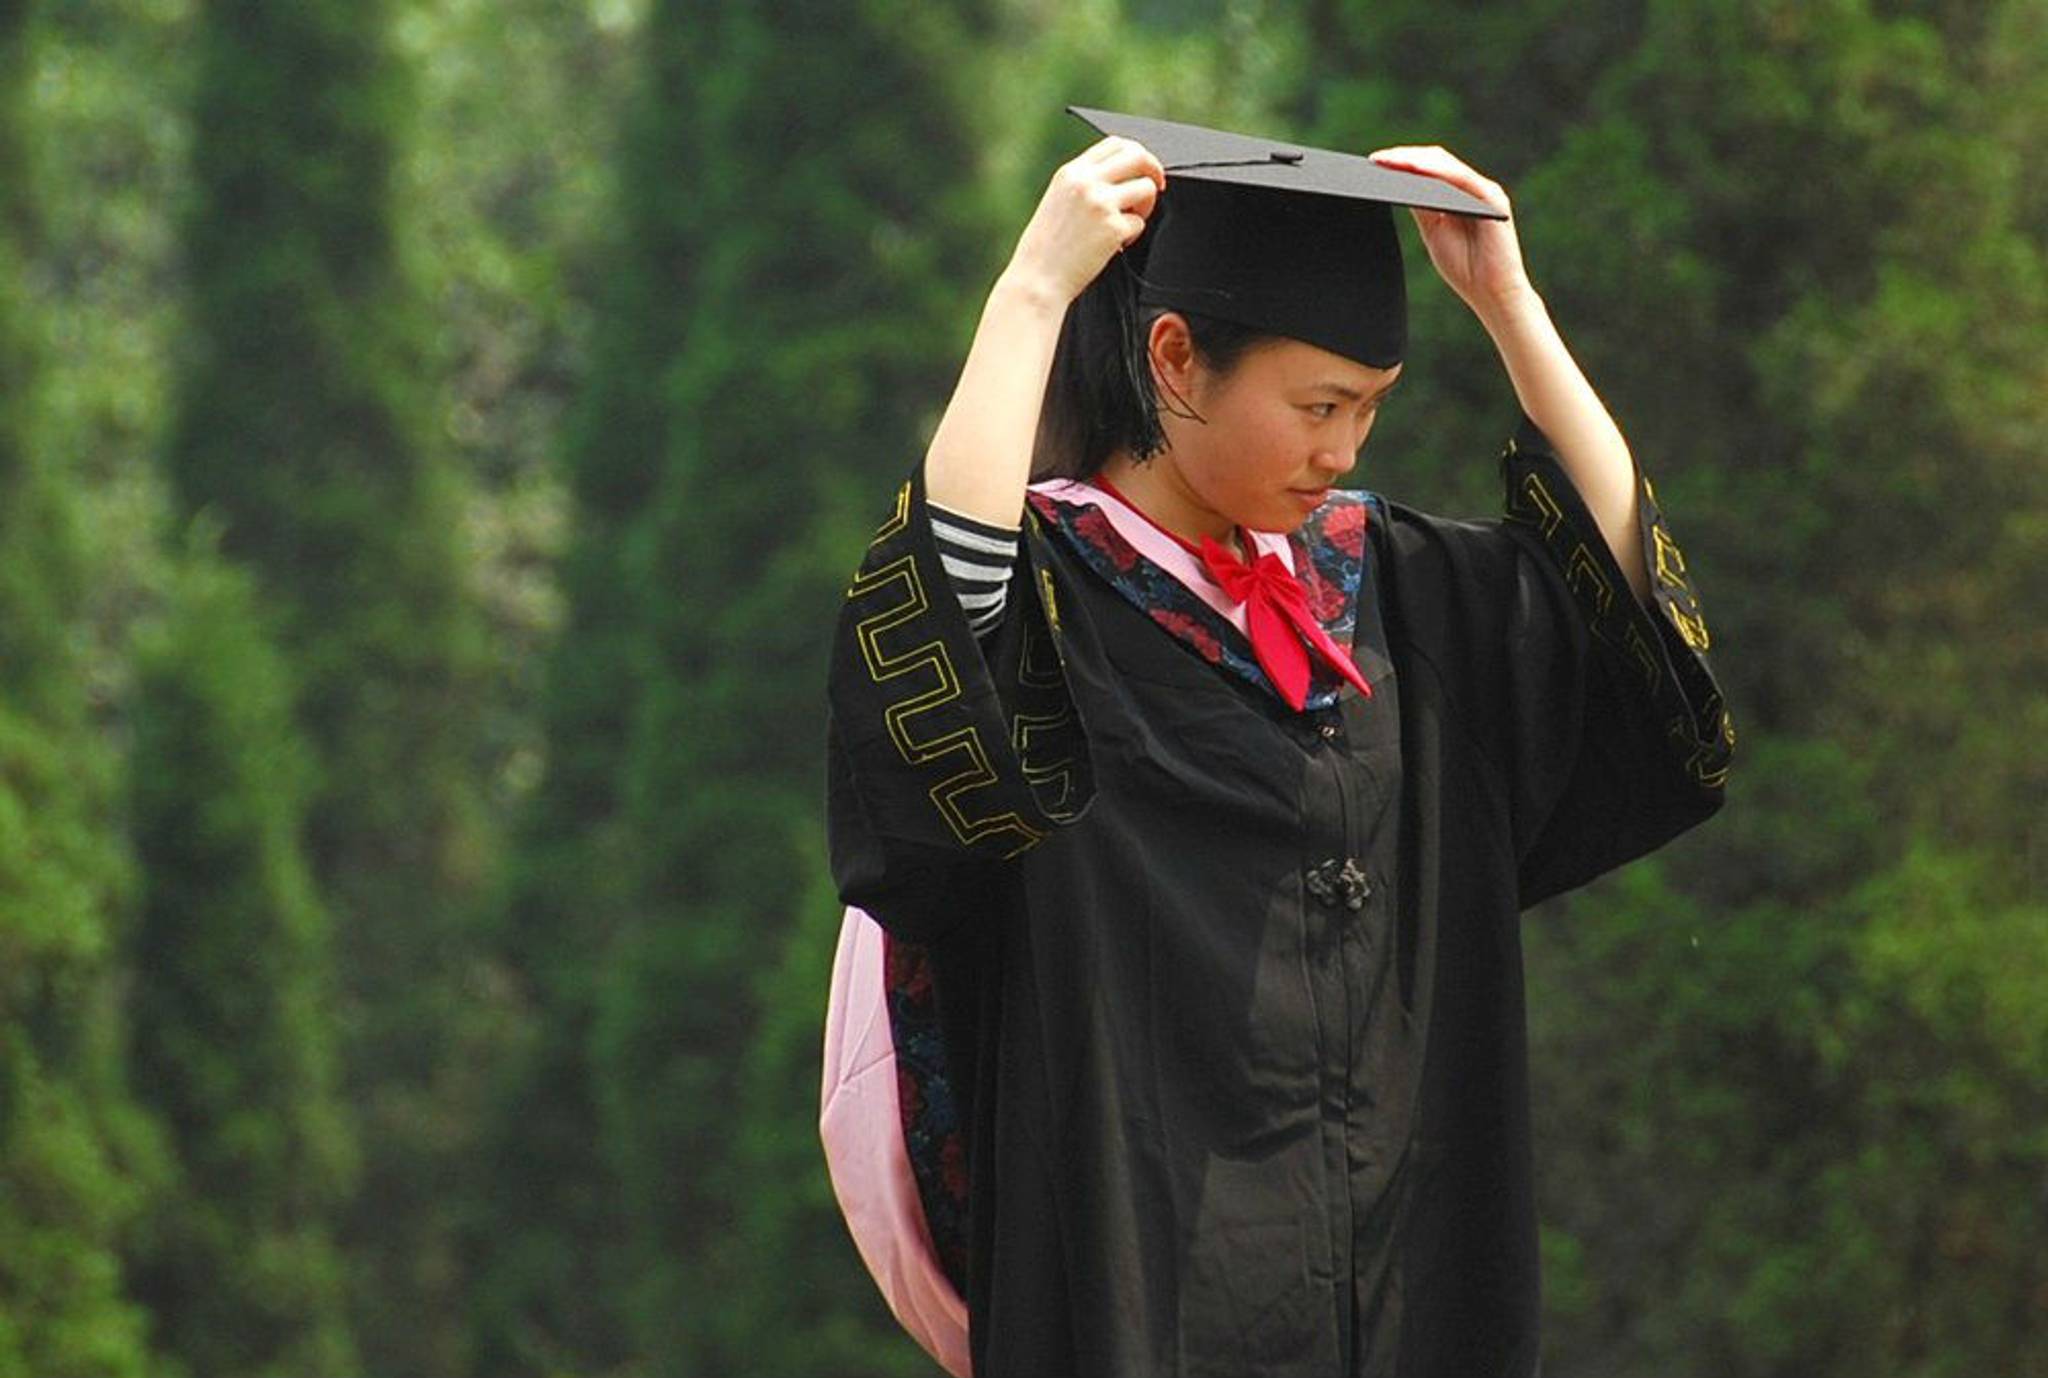 Chinese graduates have plenty of job prospects